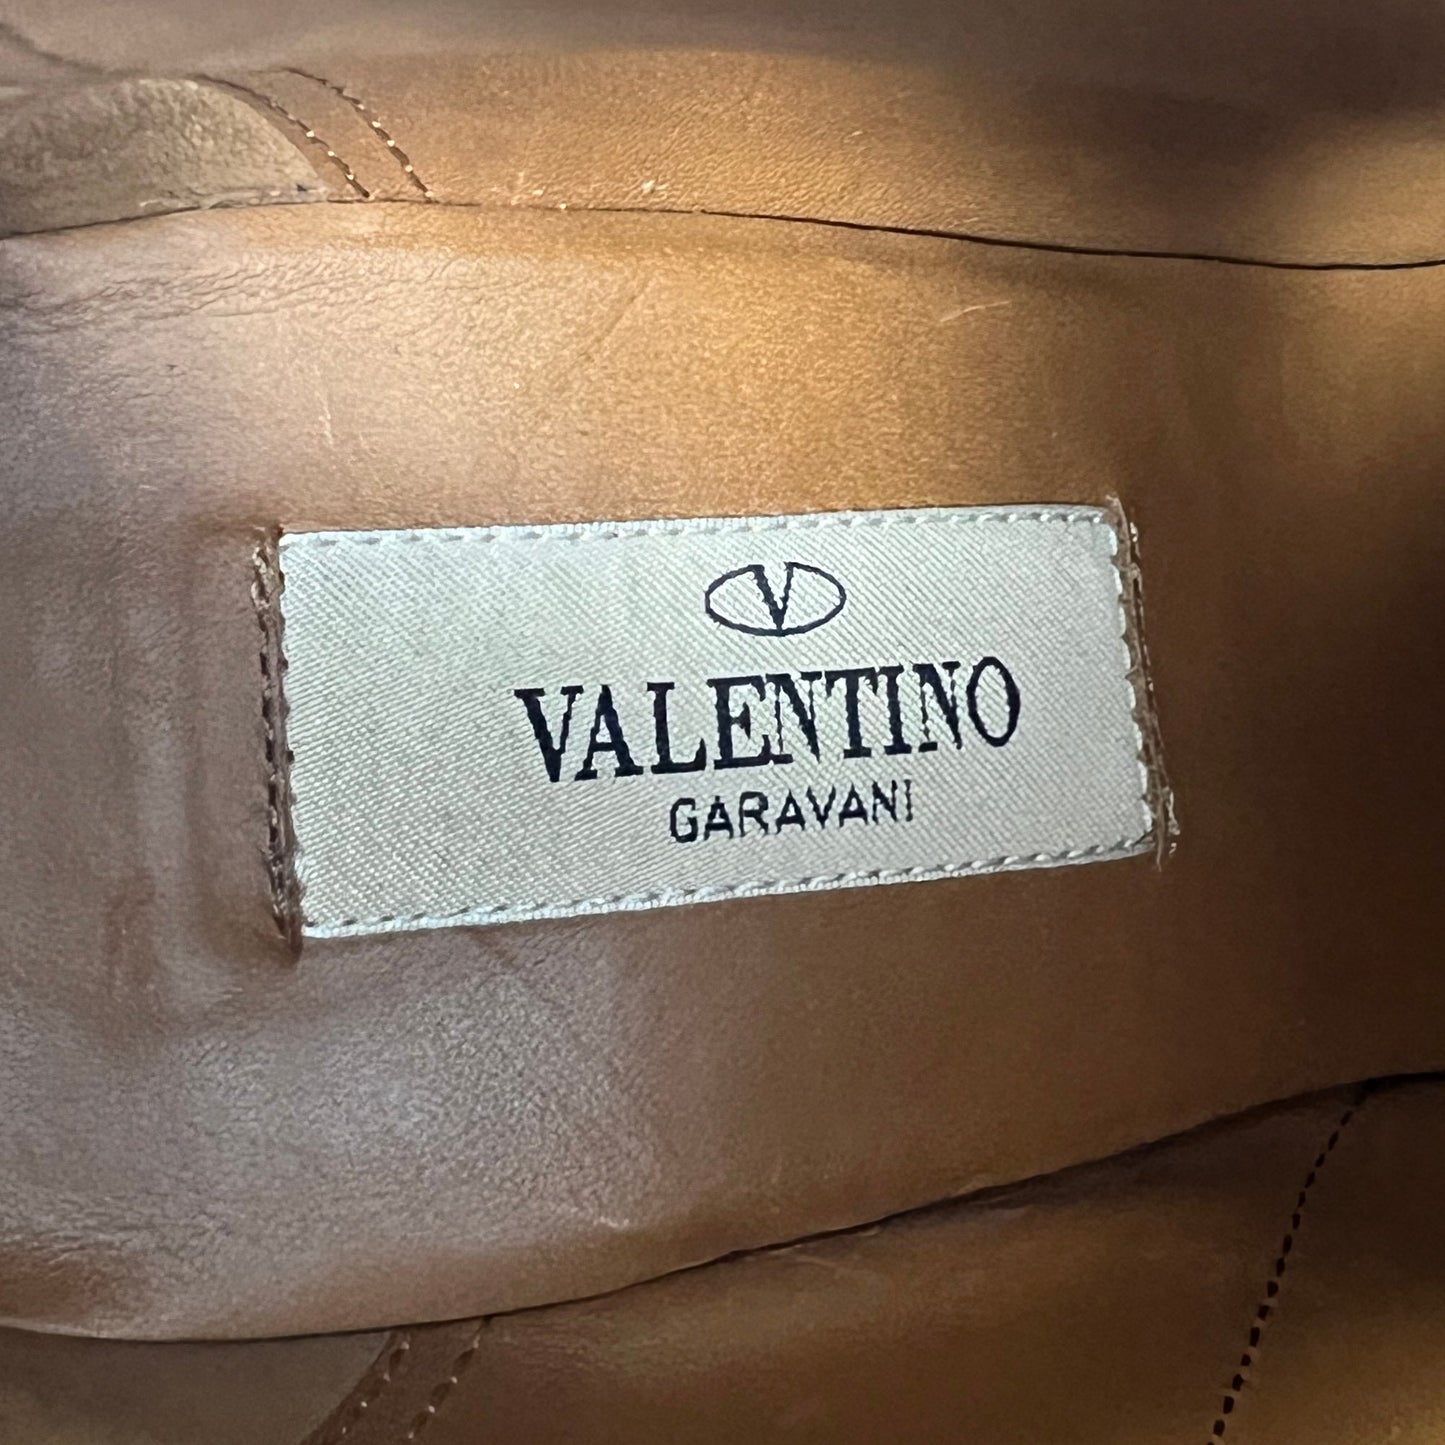 Valentino Garavani Rockstud Black Leather Studded Pointed Block Heel Ankle Boots Size EU 37.5